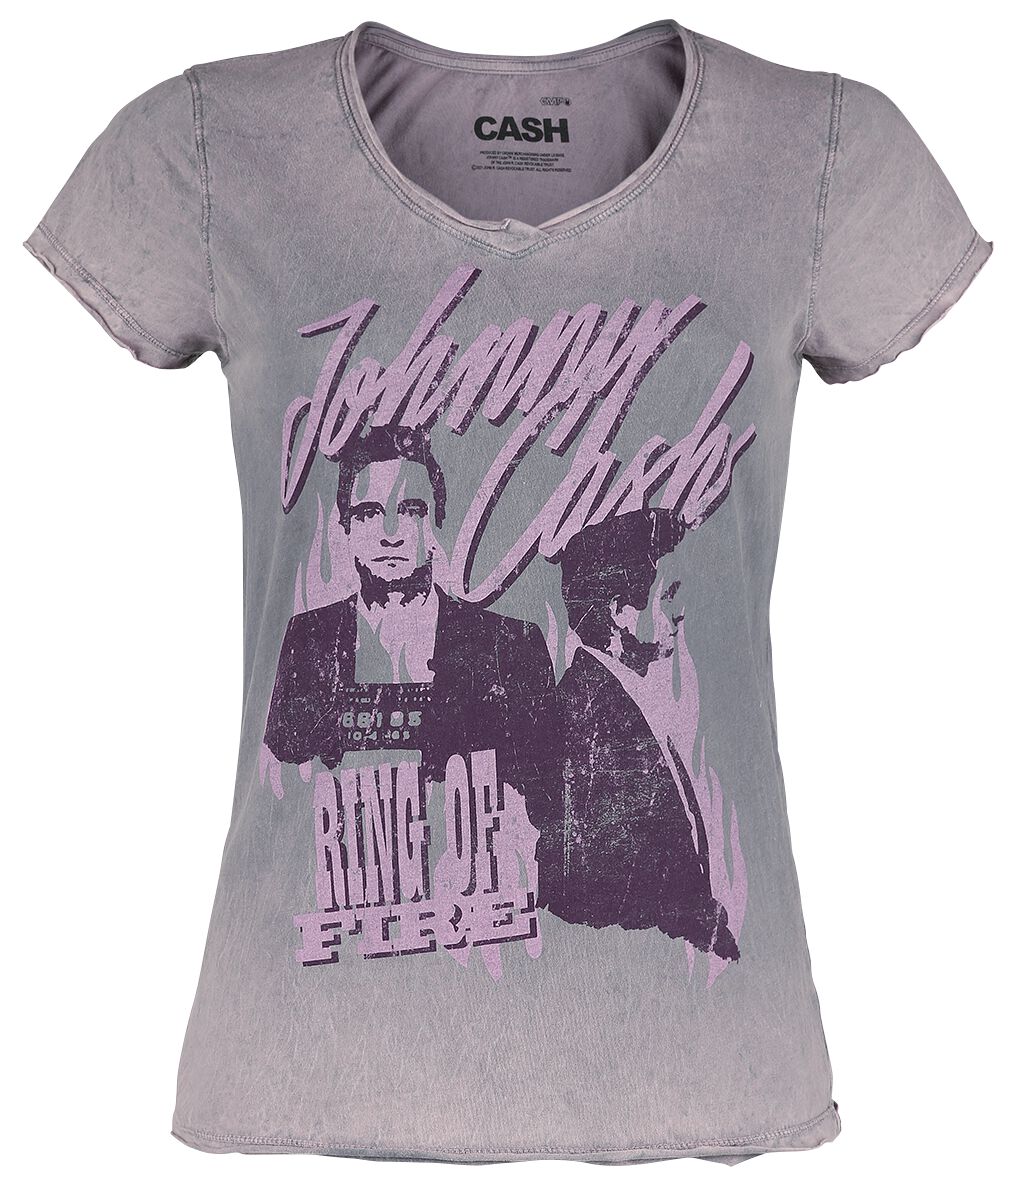 Johnny Cash Sasha ring Of Fire T-Shirt pink black